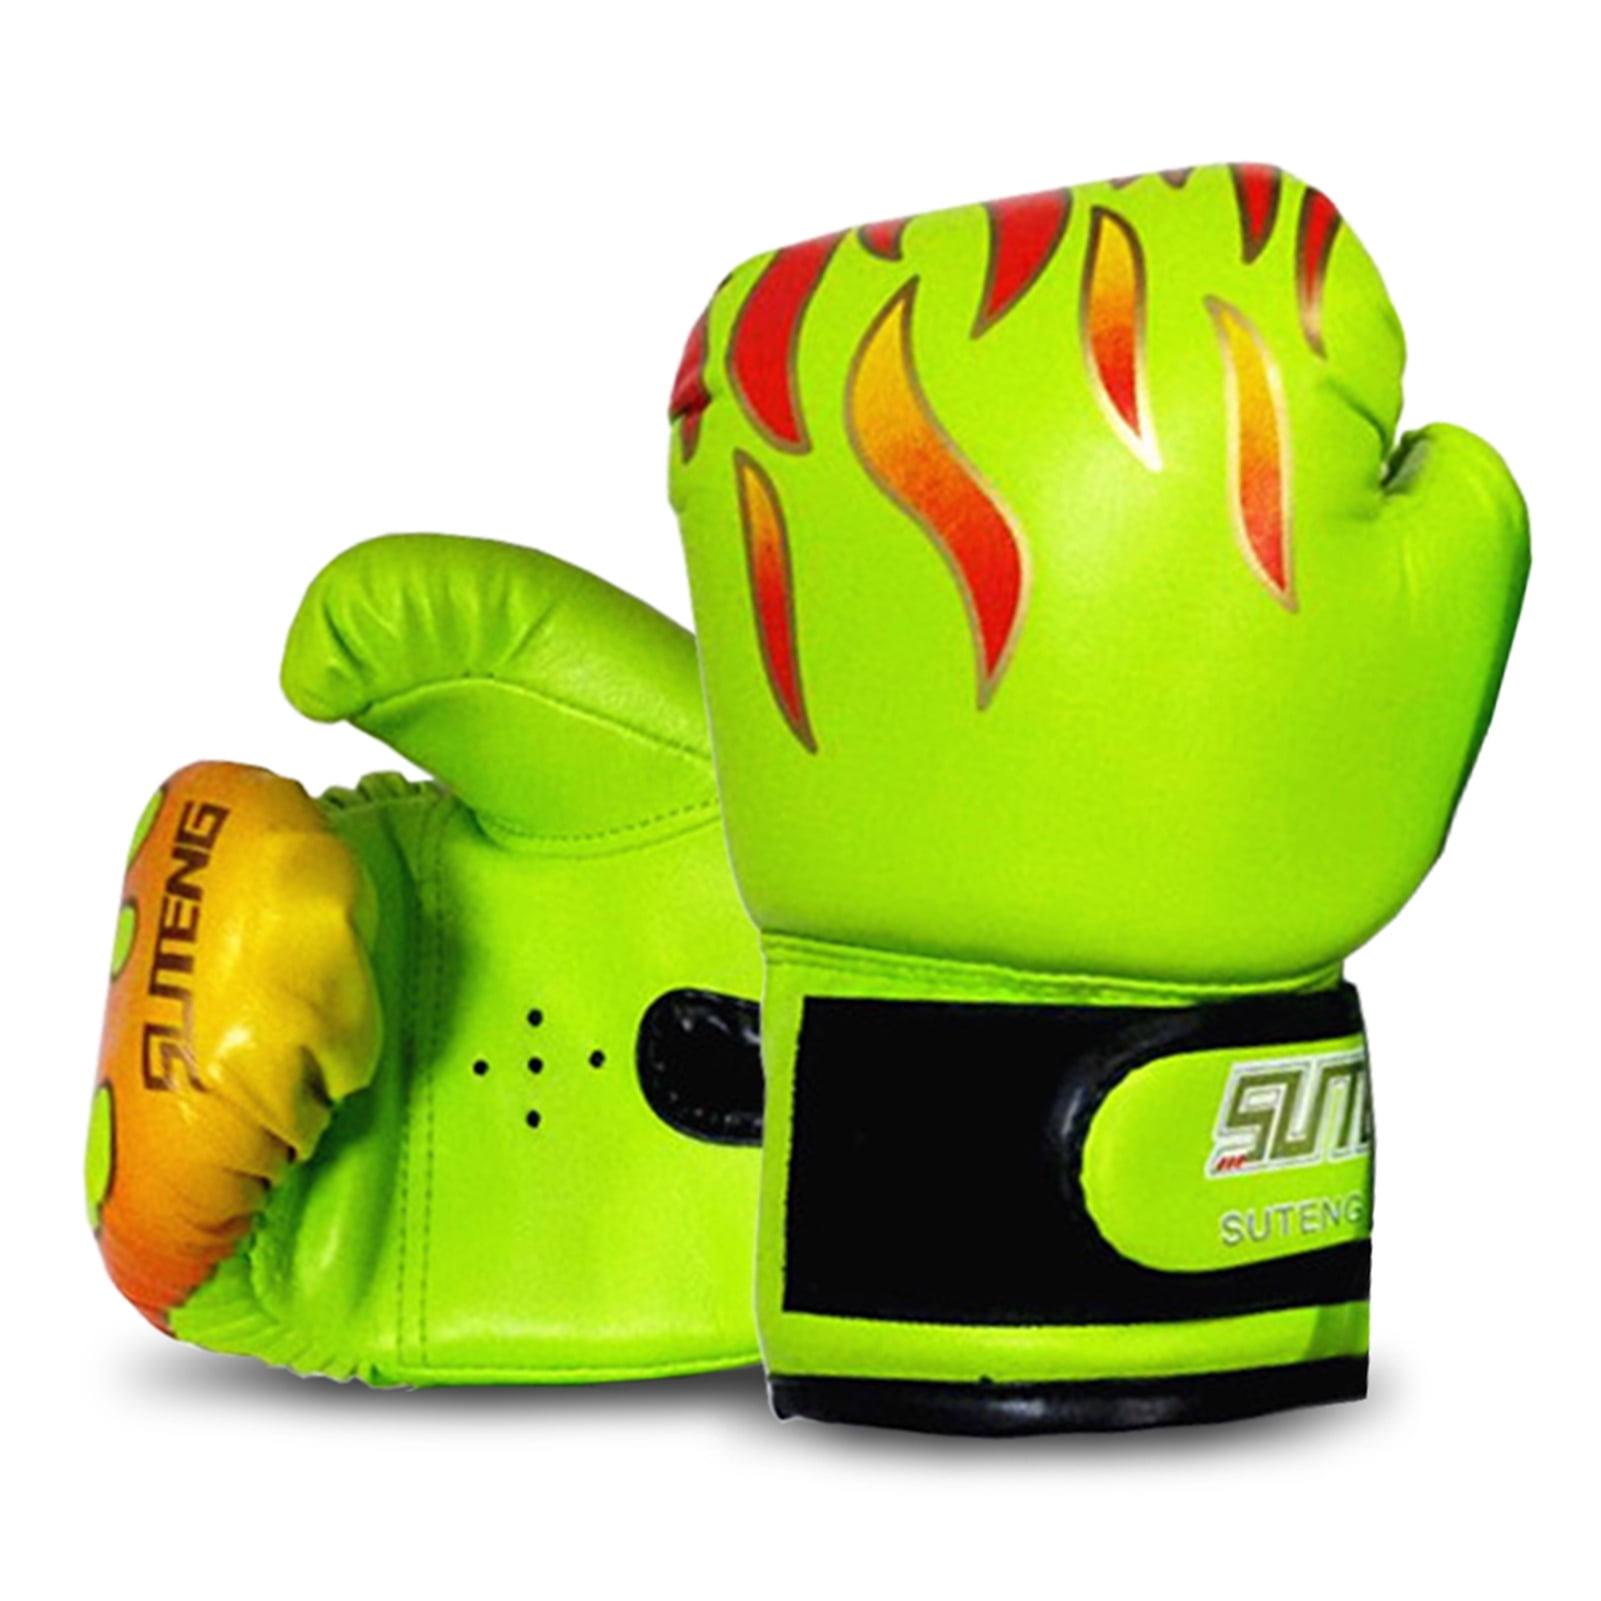 Practice Training Punching Gloves Muay Thai MMA Gloves Kids Boxing Gloves 6 oz 